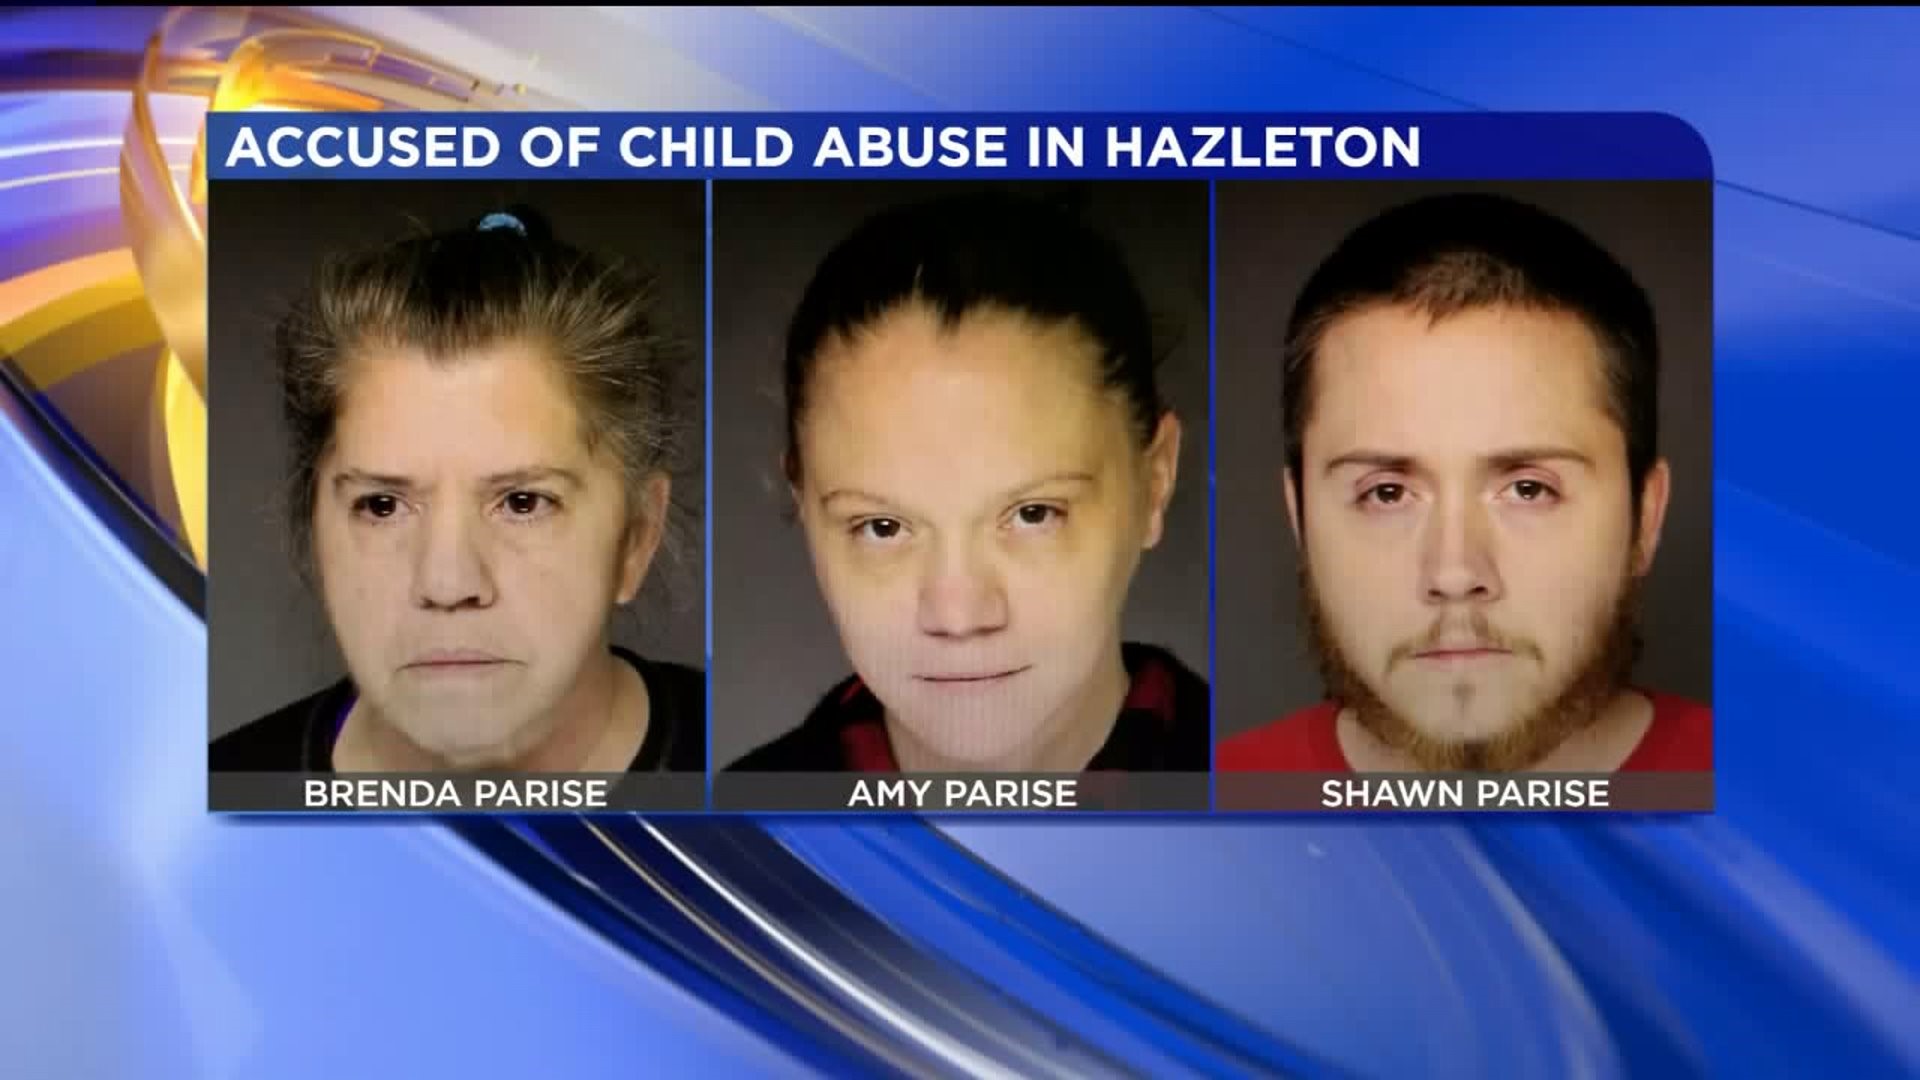 Three Accused of Child Abuse in Hazleton